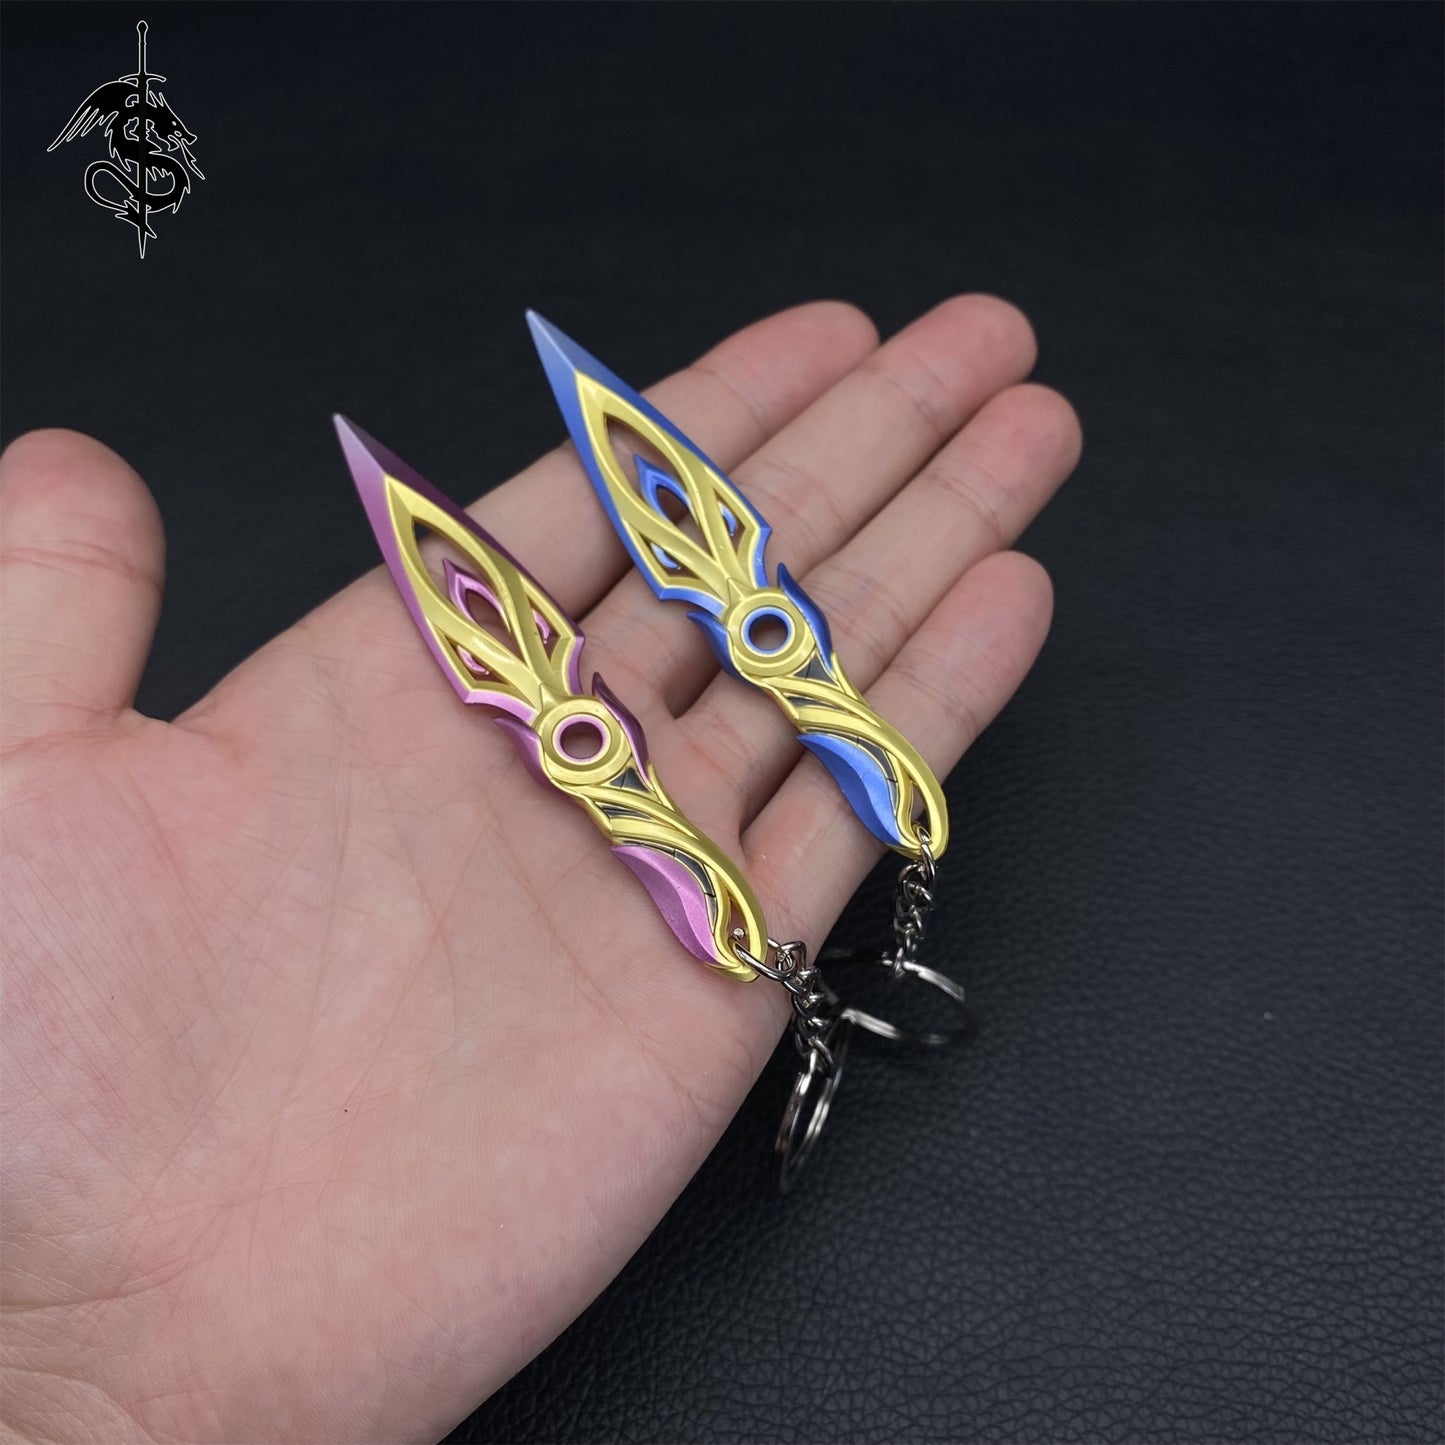 Mini Mystbloom Kunai Metal keychain